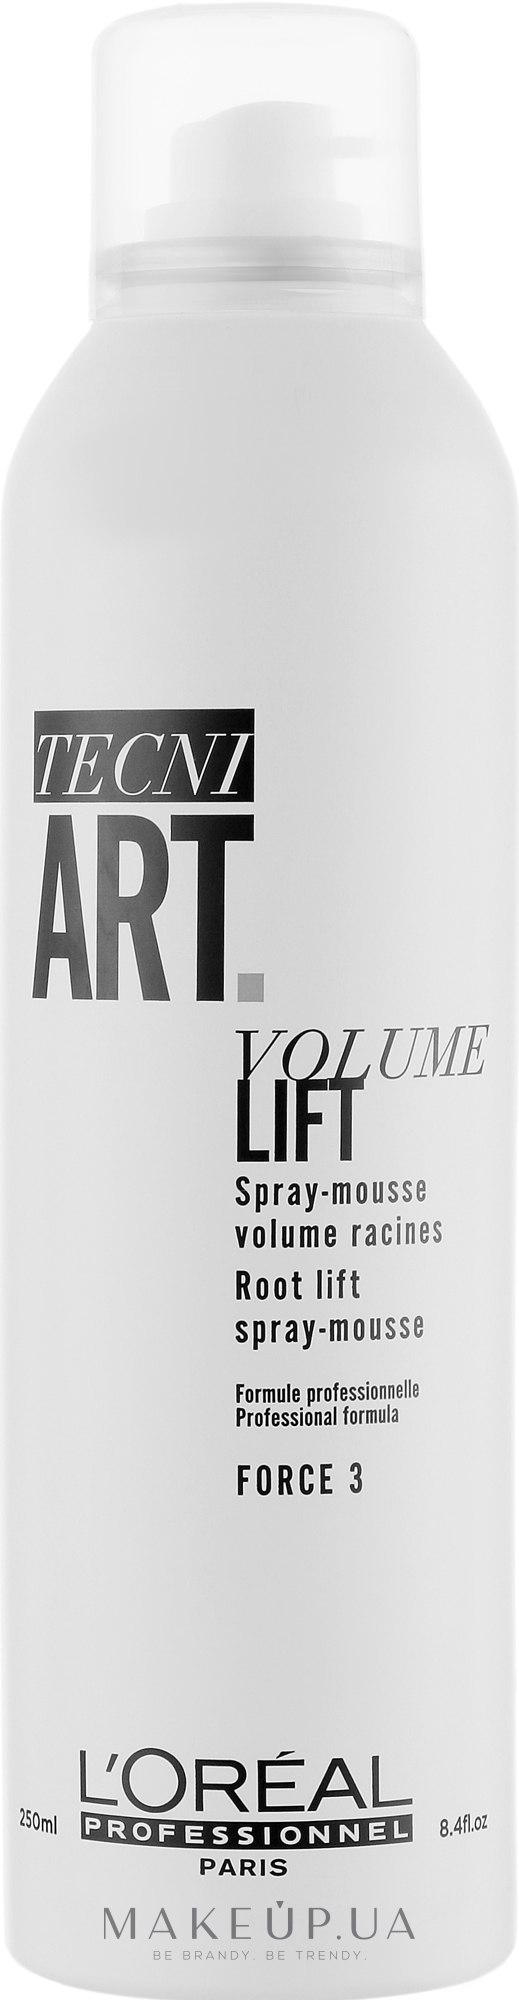 Мусс-спрей для прикорневого объема - L'Oreal Professionnel Tecni.art Volume Lift Spray-Mousse — фото 250ml